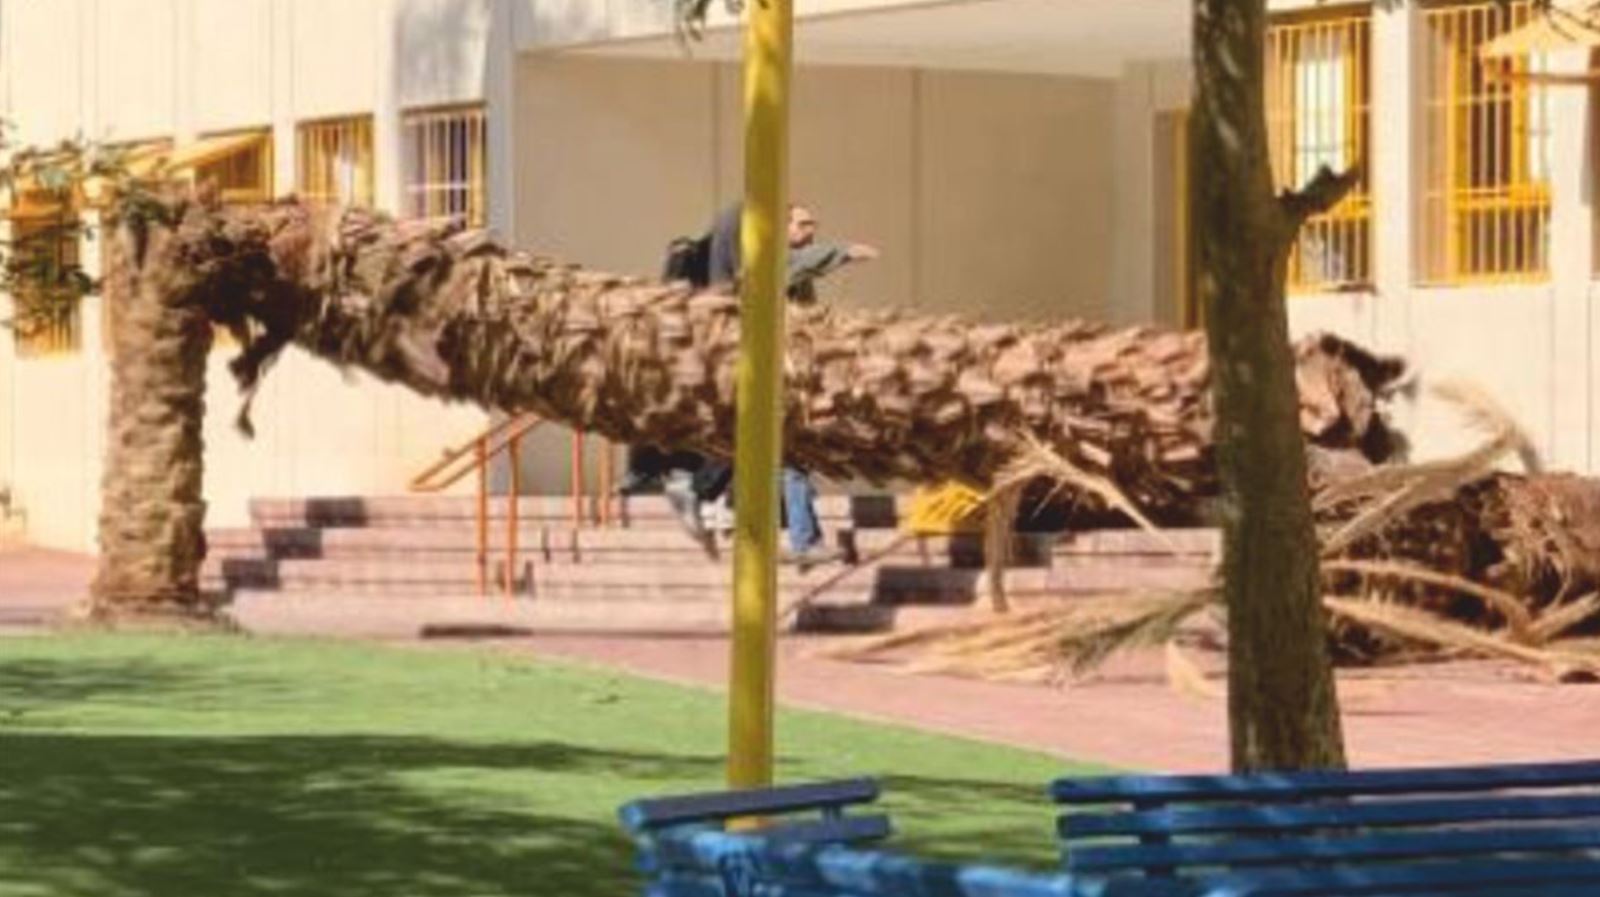 עץ דקל קרס בחצר בית הספר בגין - בנס נמנע אסון